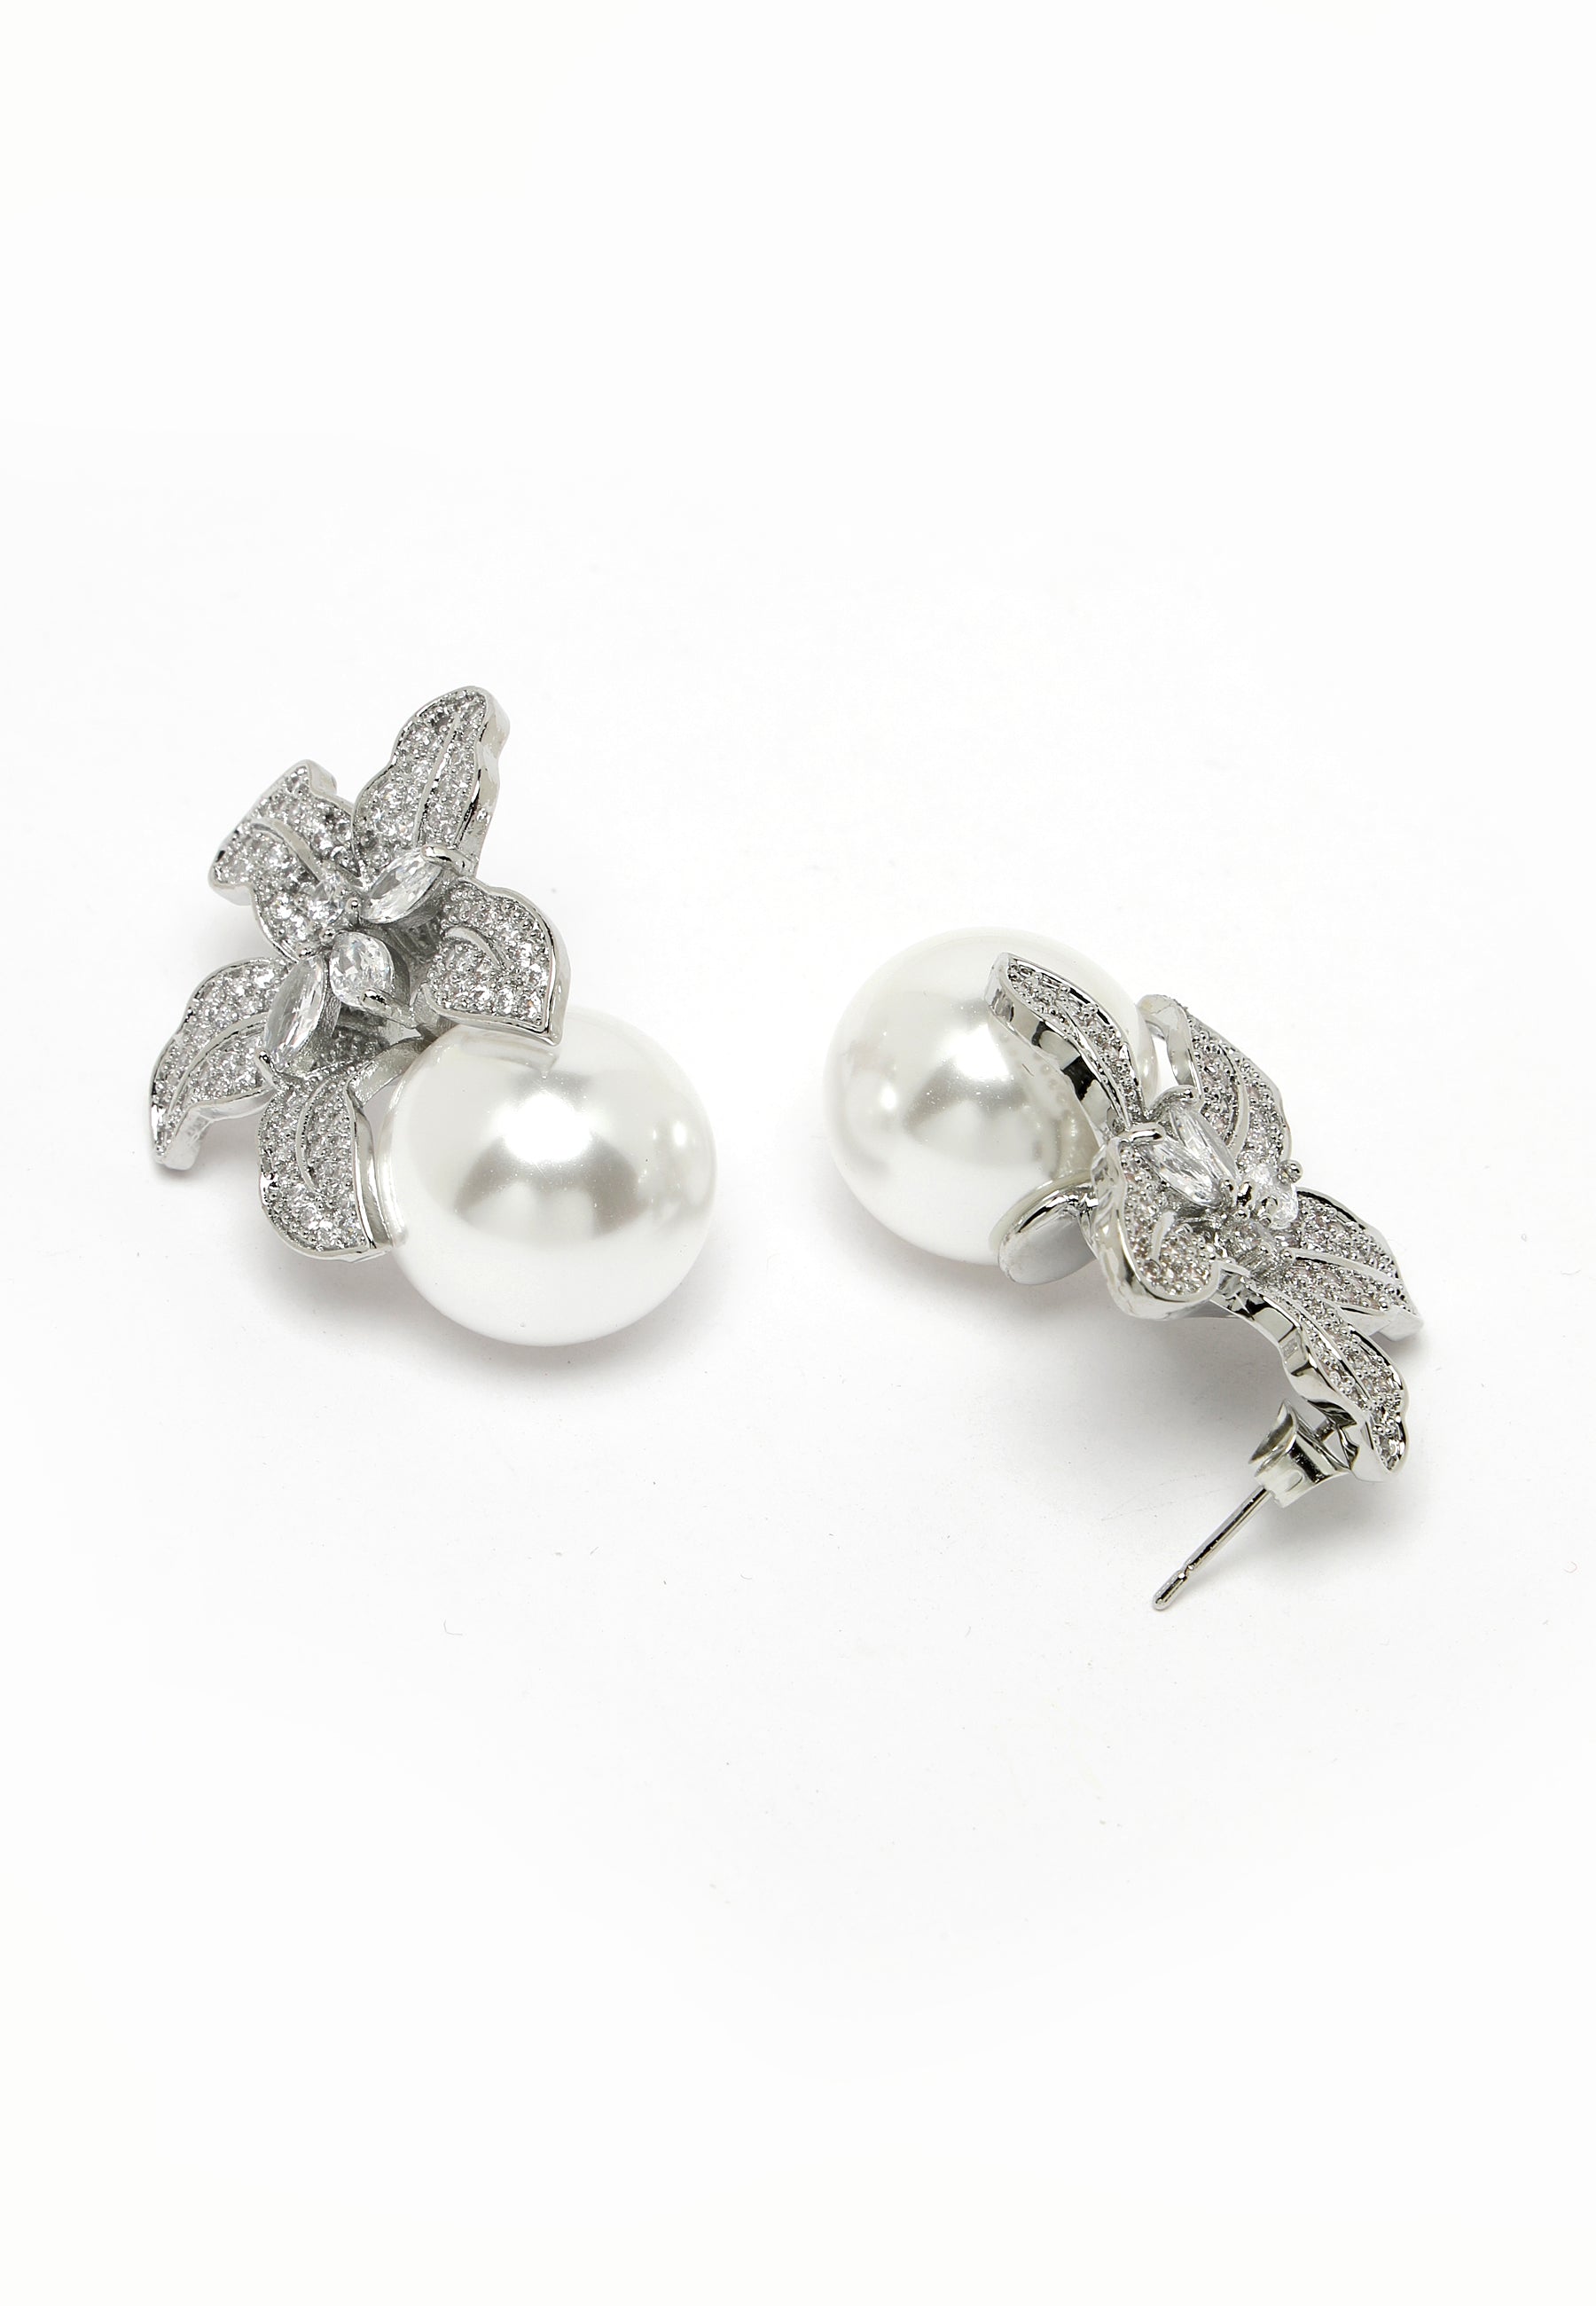 Avant-Garde Paris Bridesmaid Silver-Colored Crystal Earrings